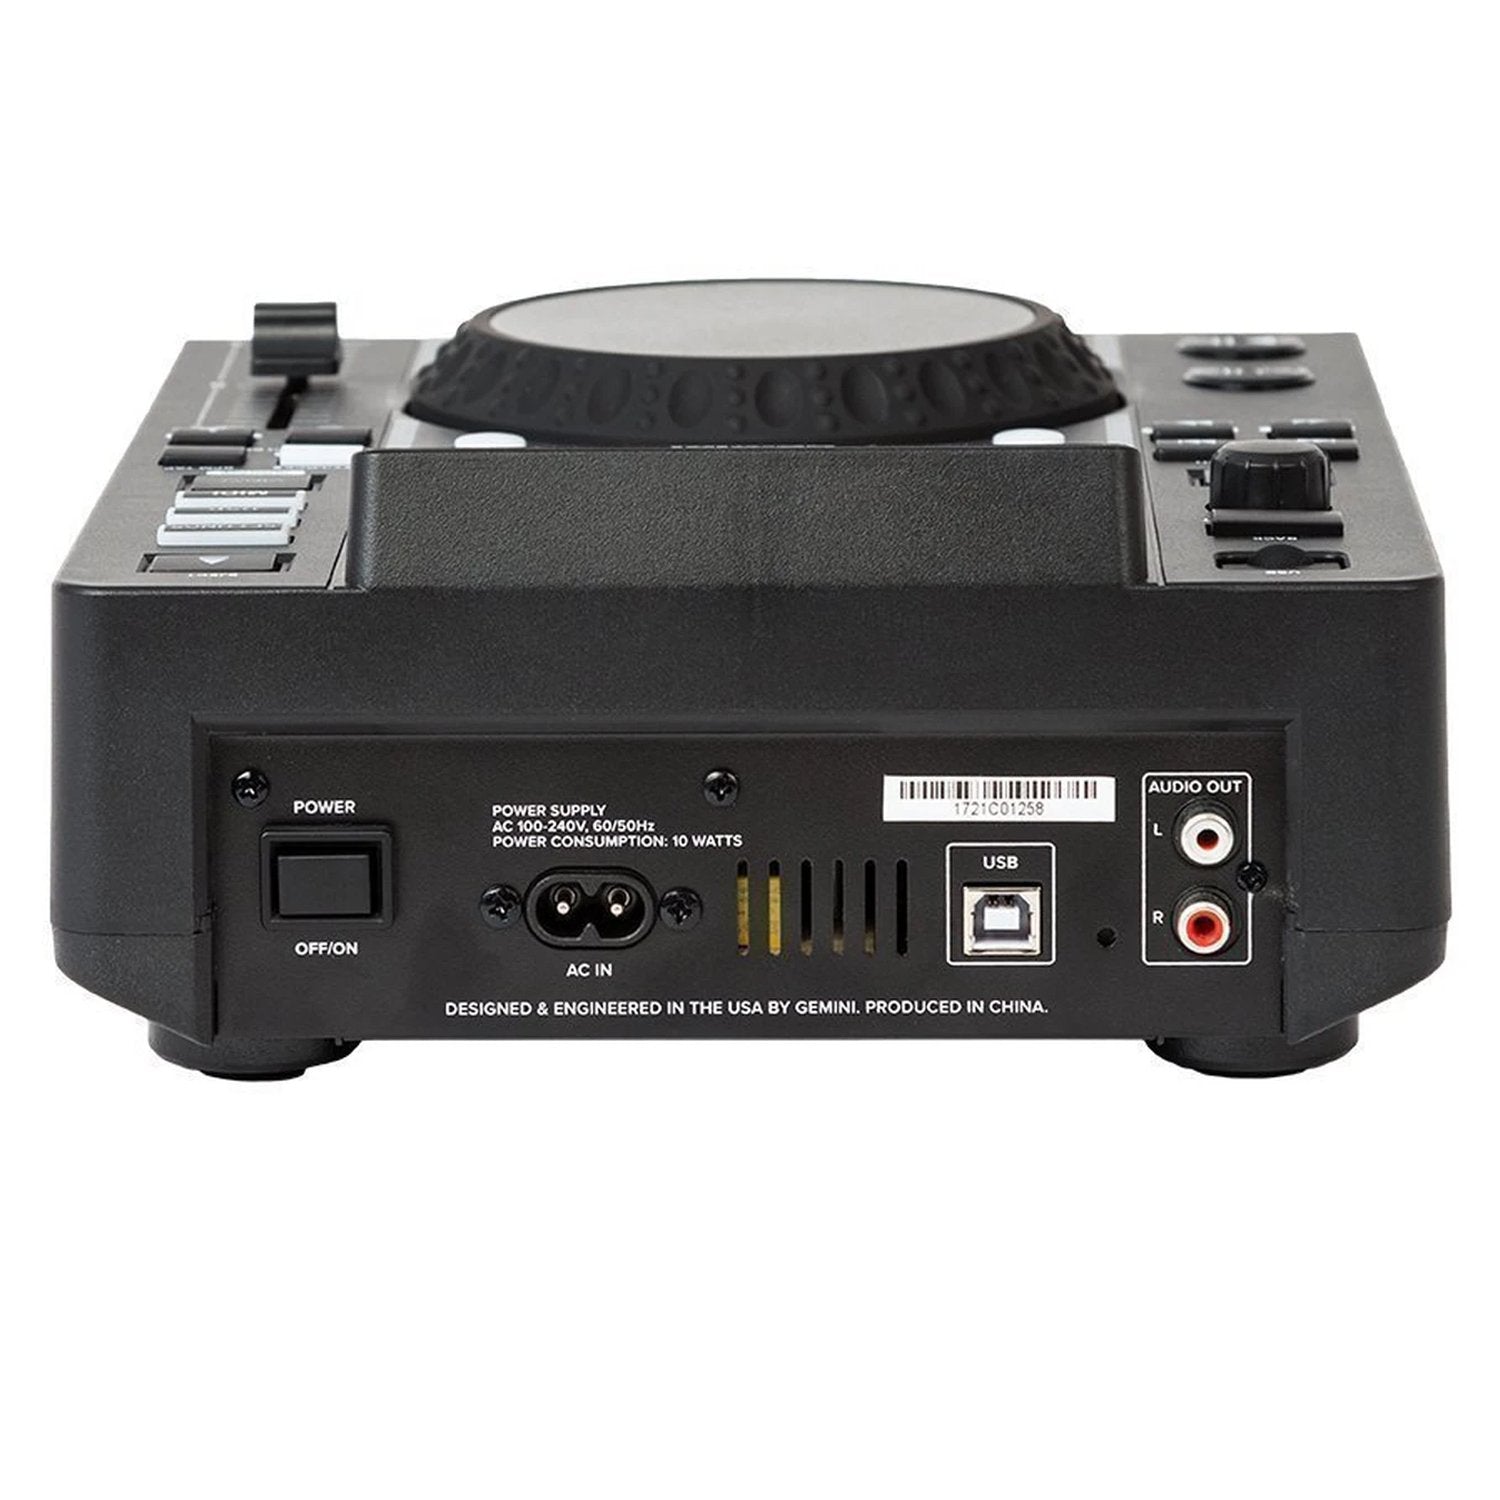 Gemini MDJ-600 Professional USB and CD Media Player - DY Pro Audio